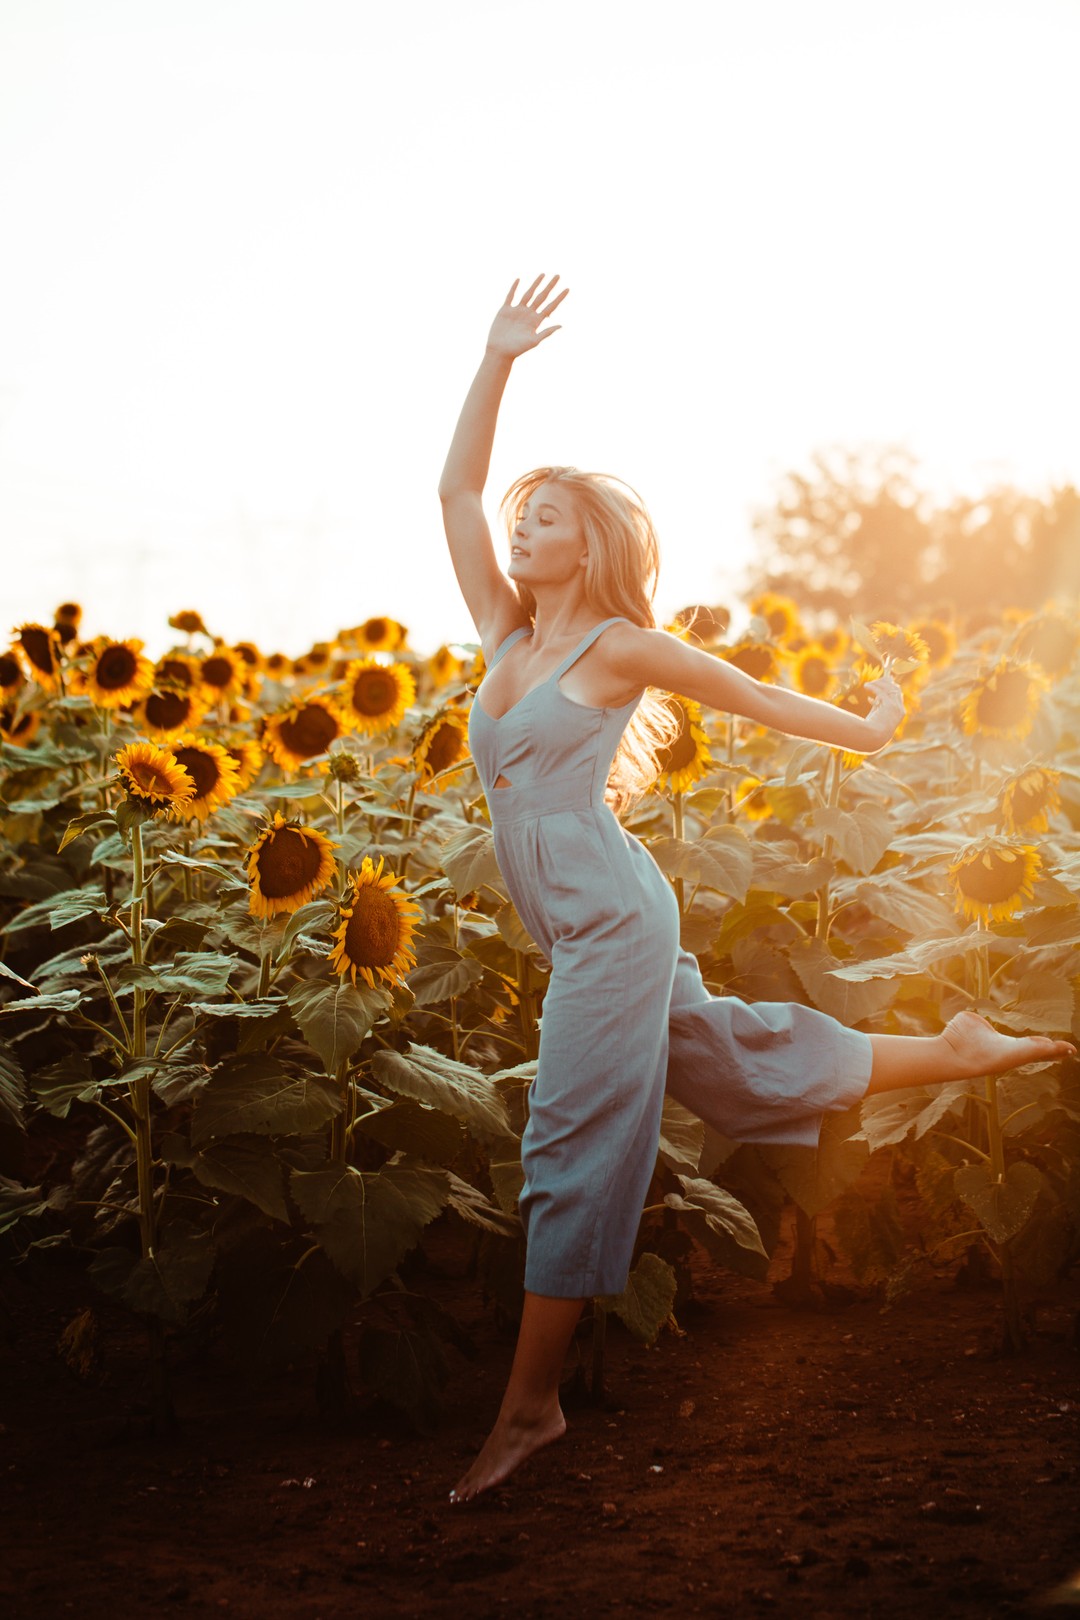 Dancing in sunflowers